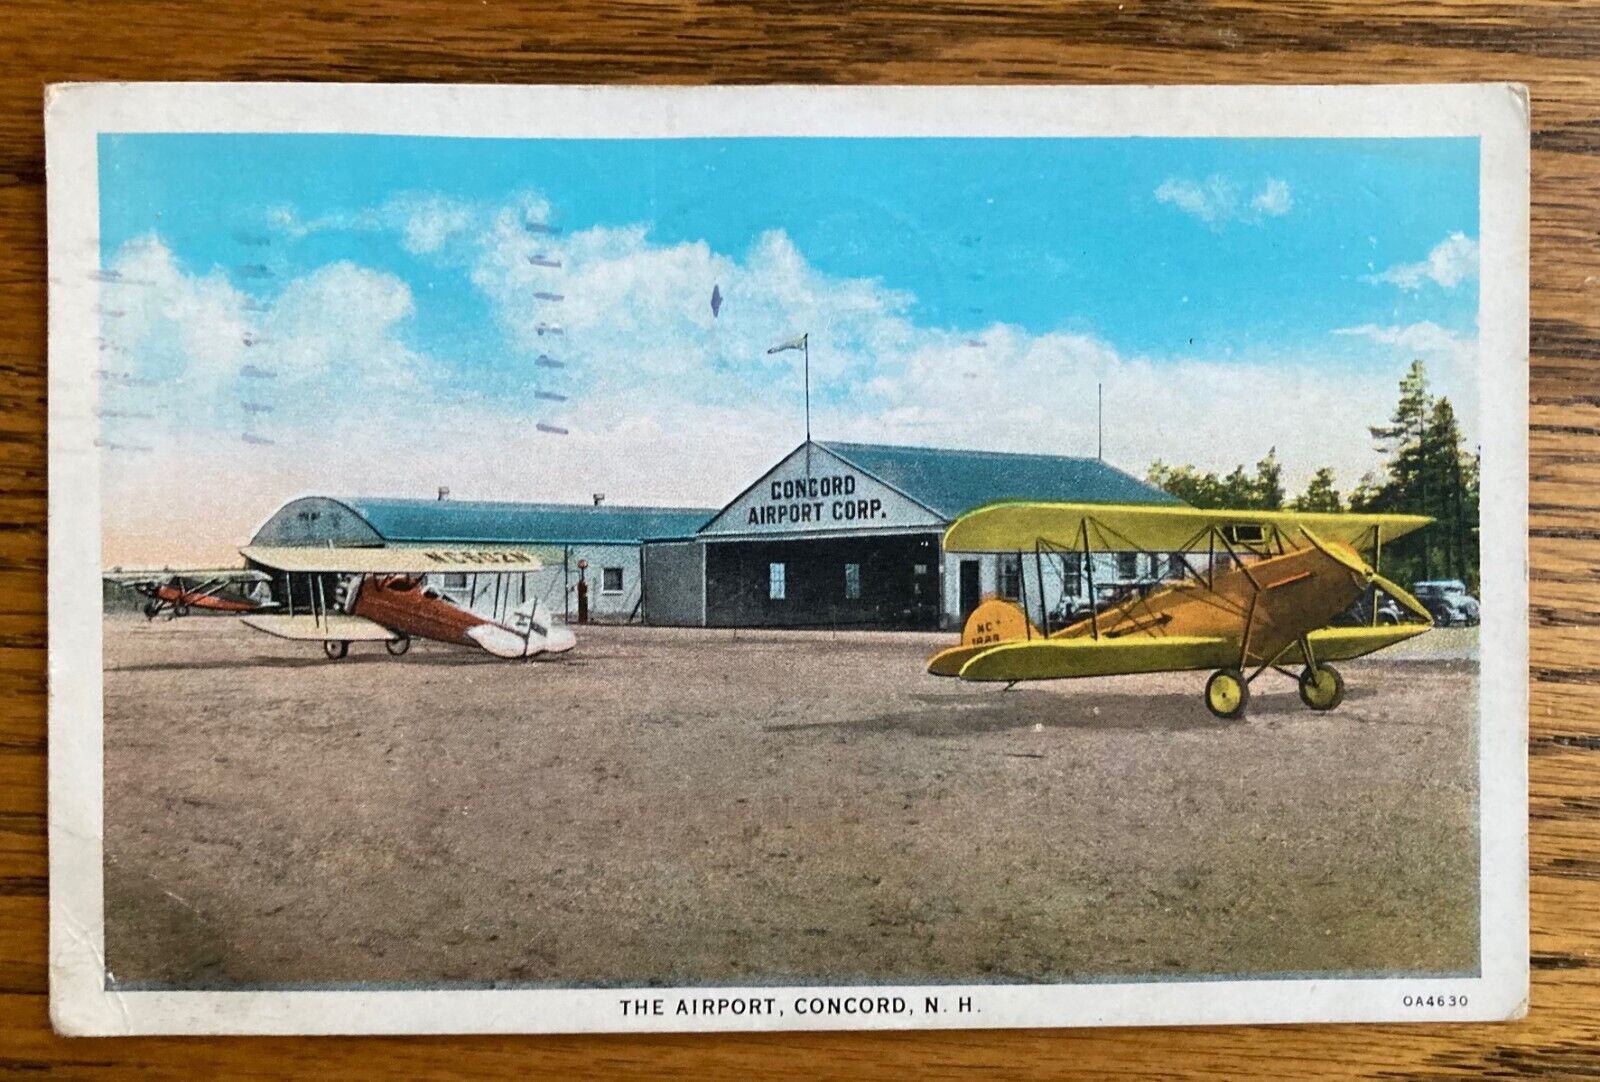 CONCORD, NEW HAMPSHIRE: Concord Airport Corp. Hangars & Biplanes ca1930